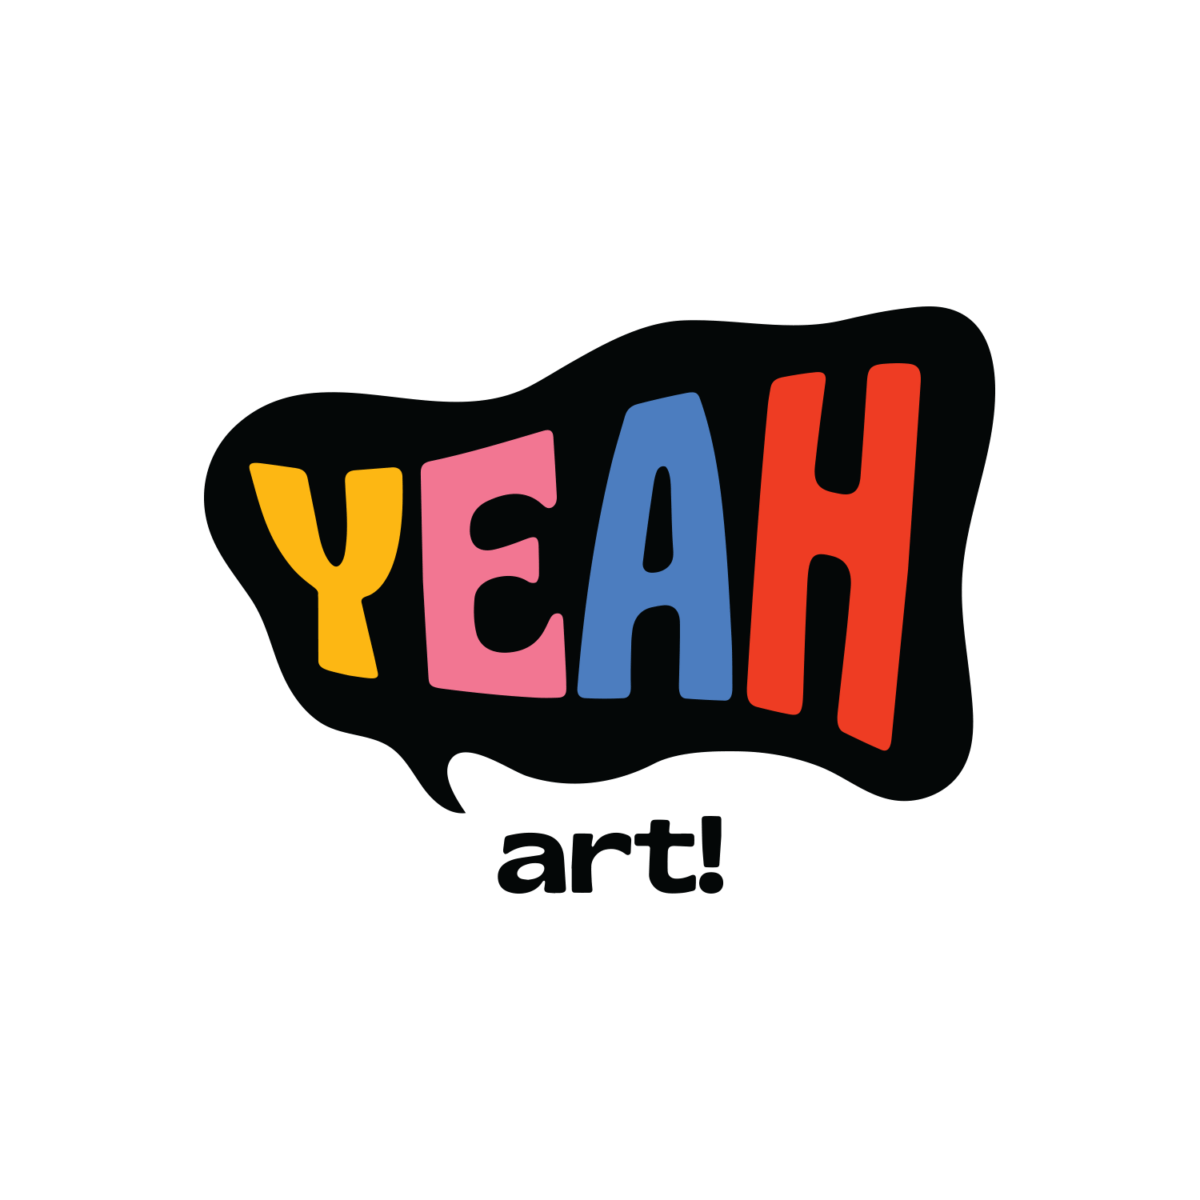 Yeah, Art! arts education nonprofit